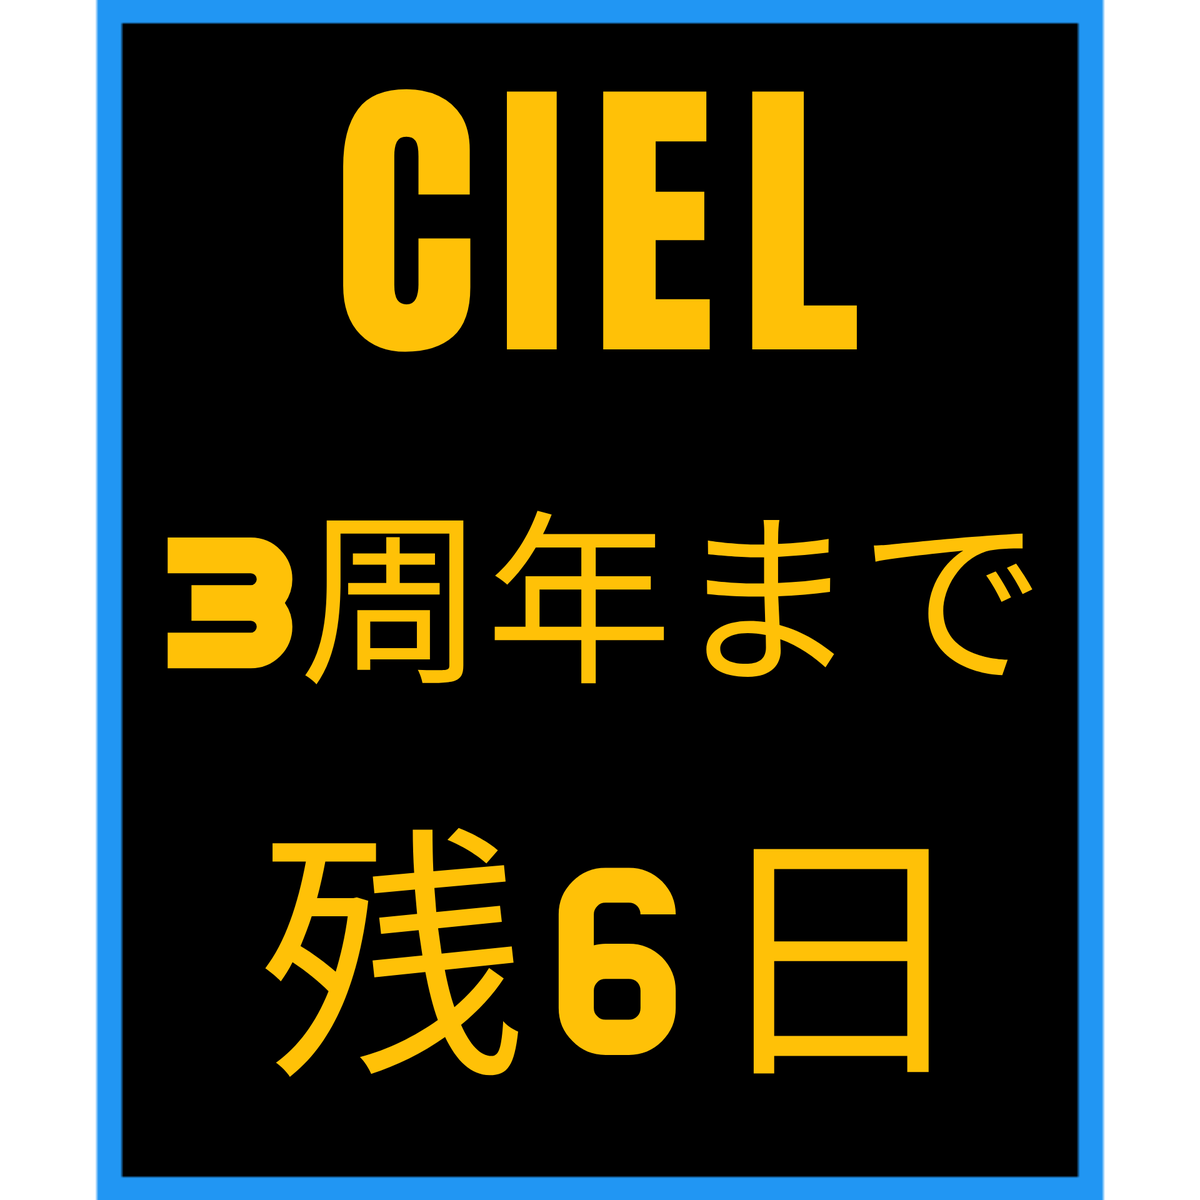 CIEL3周年まで後6日！

 #CIEL3周年カウントダウン
 #CIEL美術部